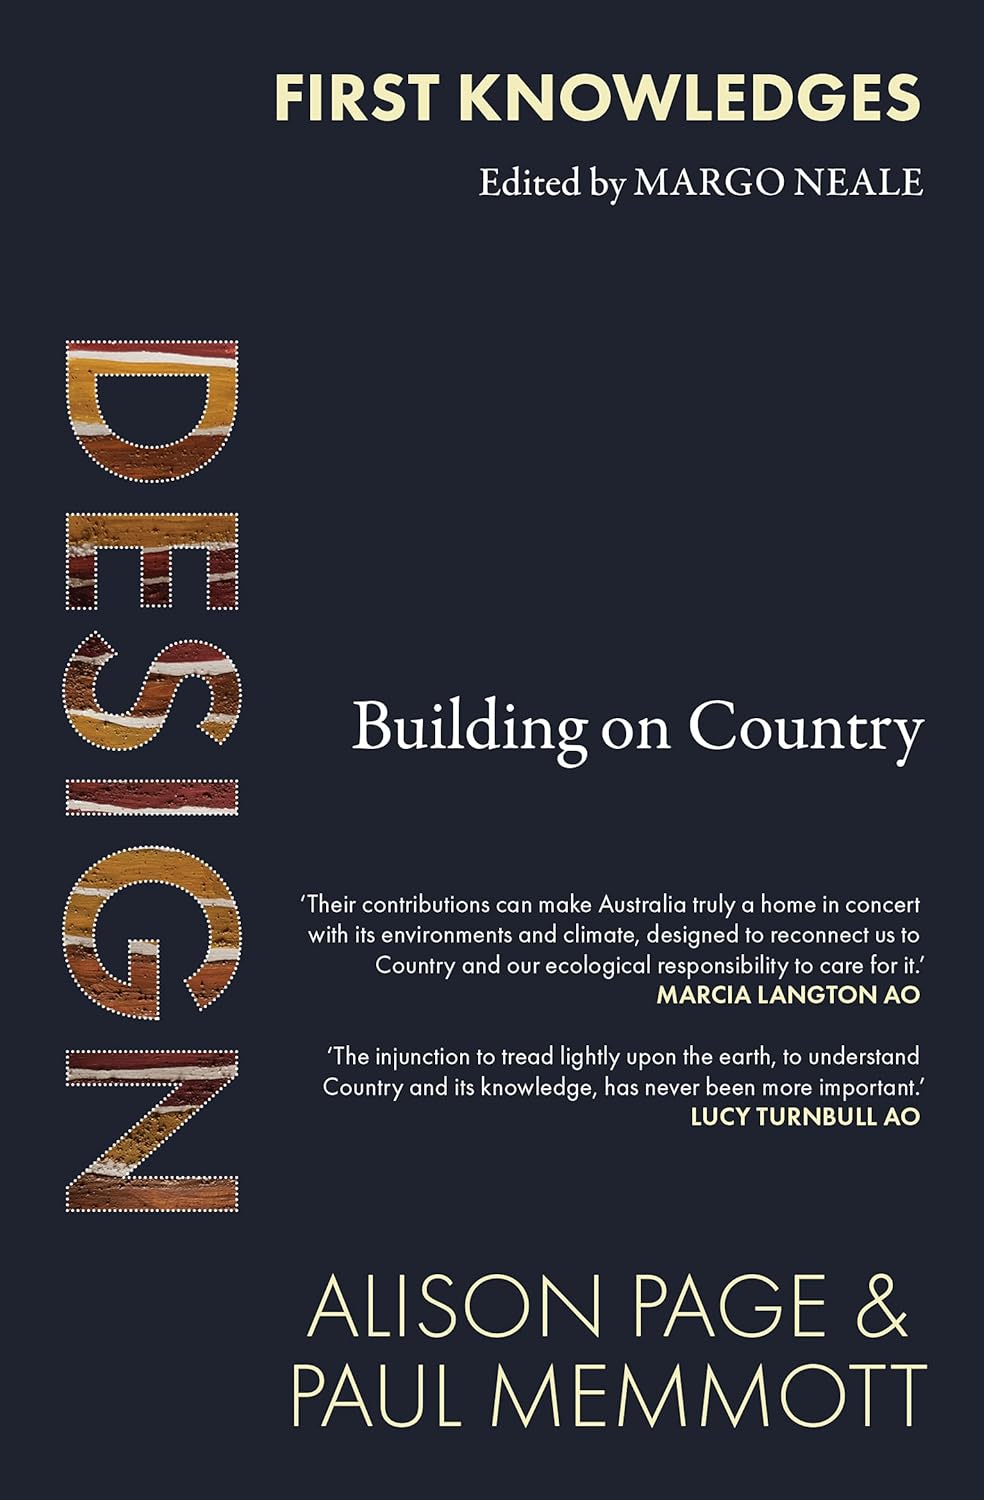 Paul Memmott, Alison Page: Design (Paperback, 2021, Thames & Hudson)